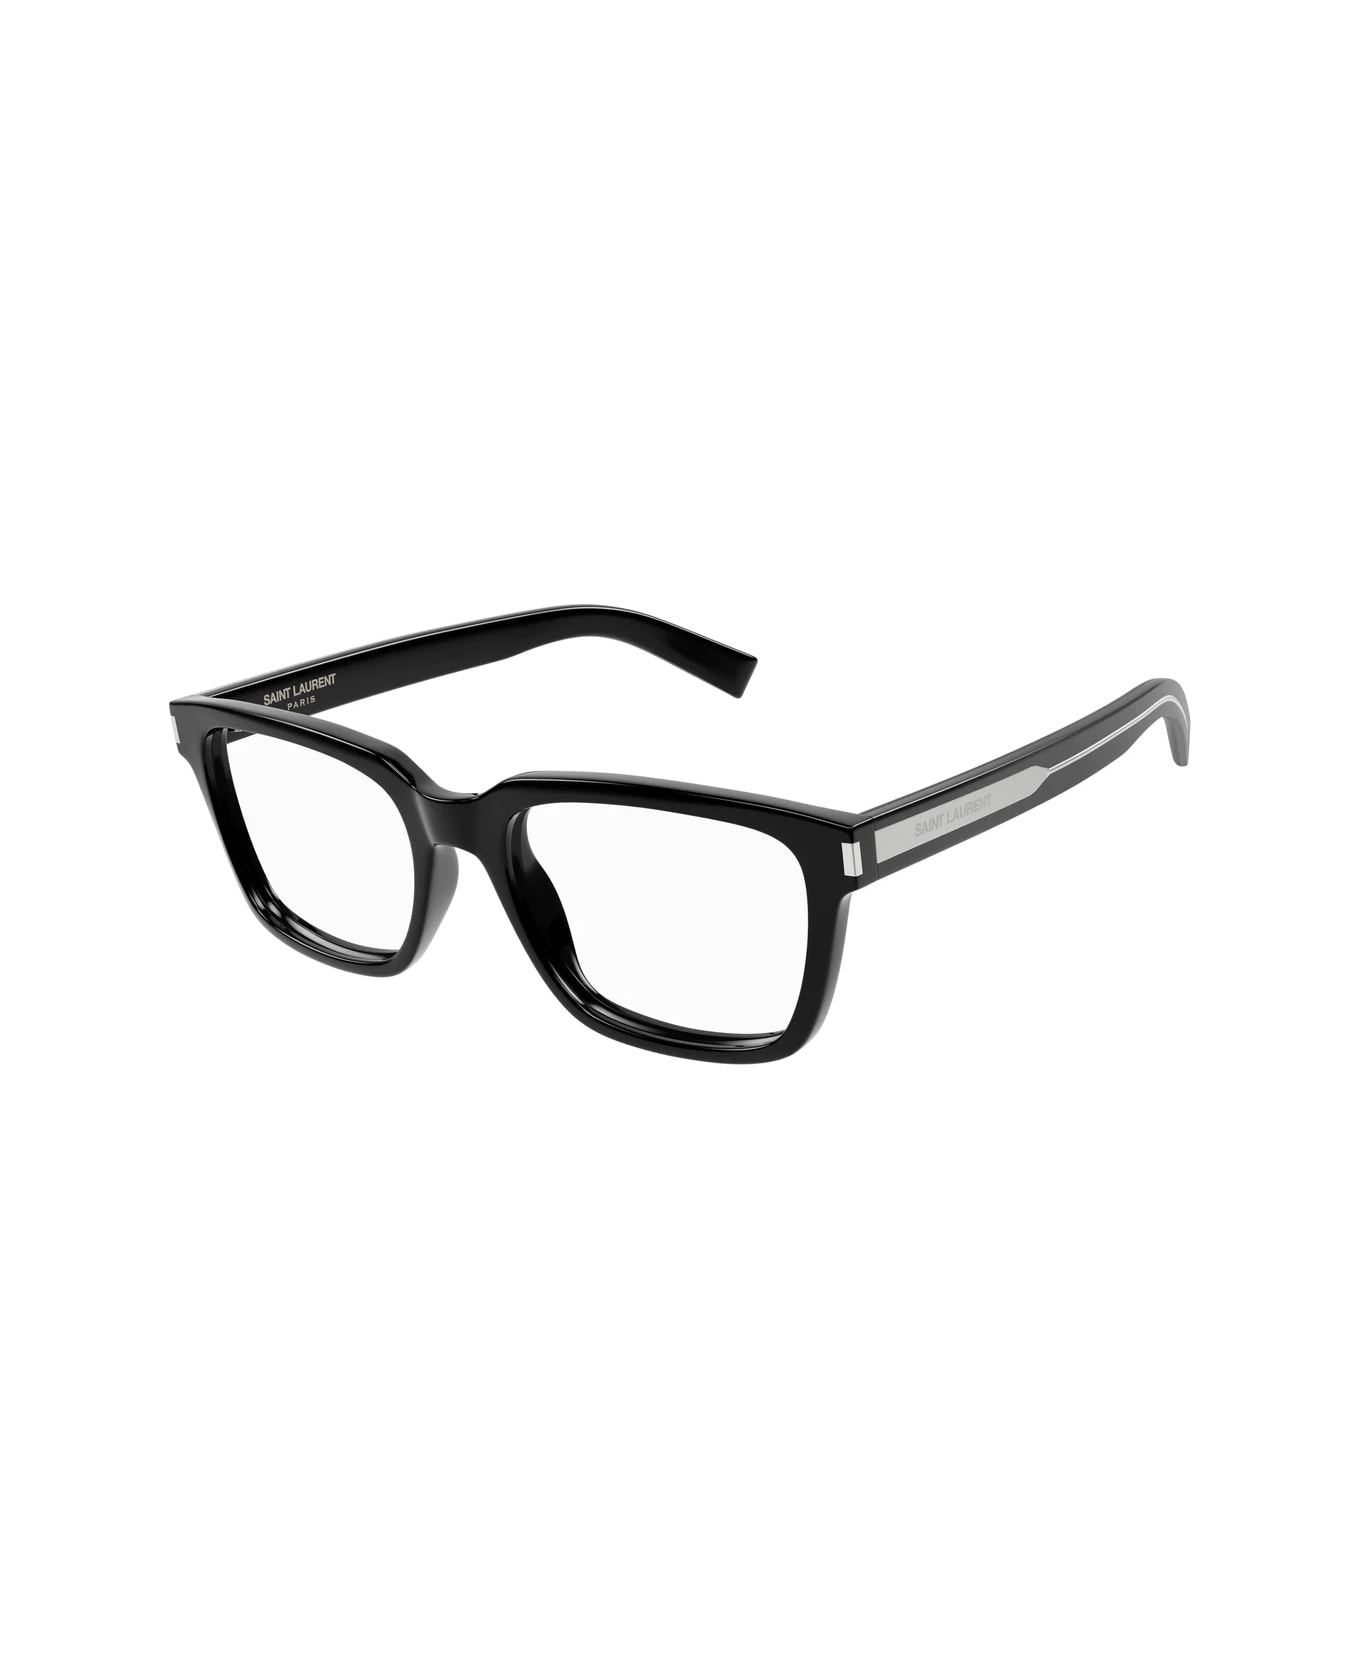 Saint Laurent Eyewear Sl 621 001 Glasses - Nero